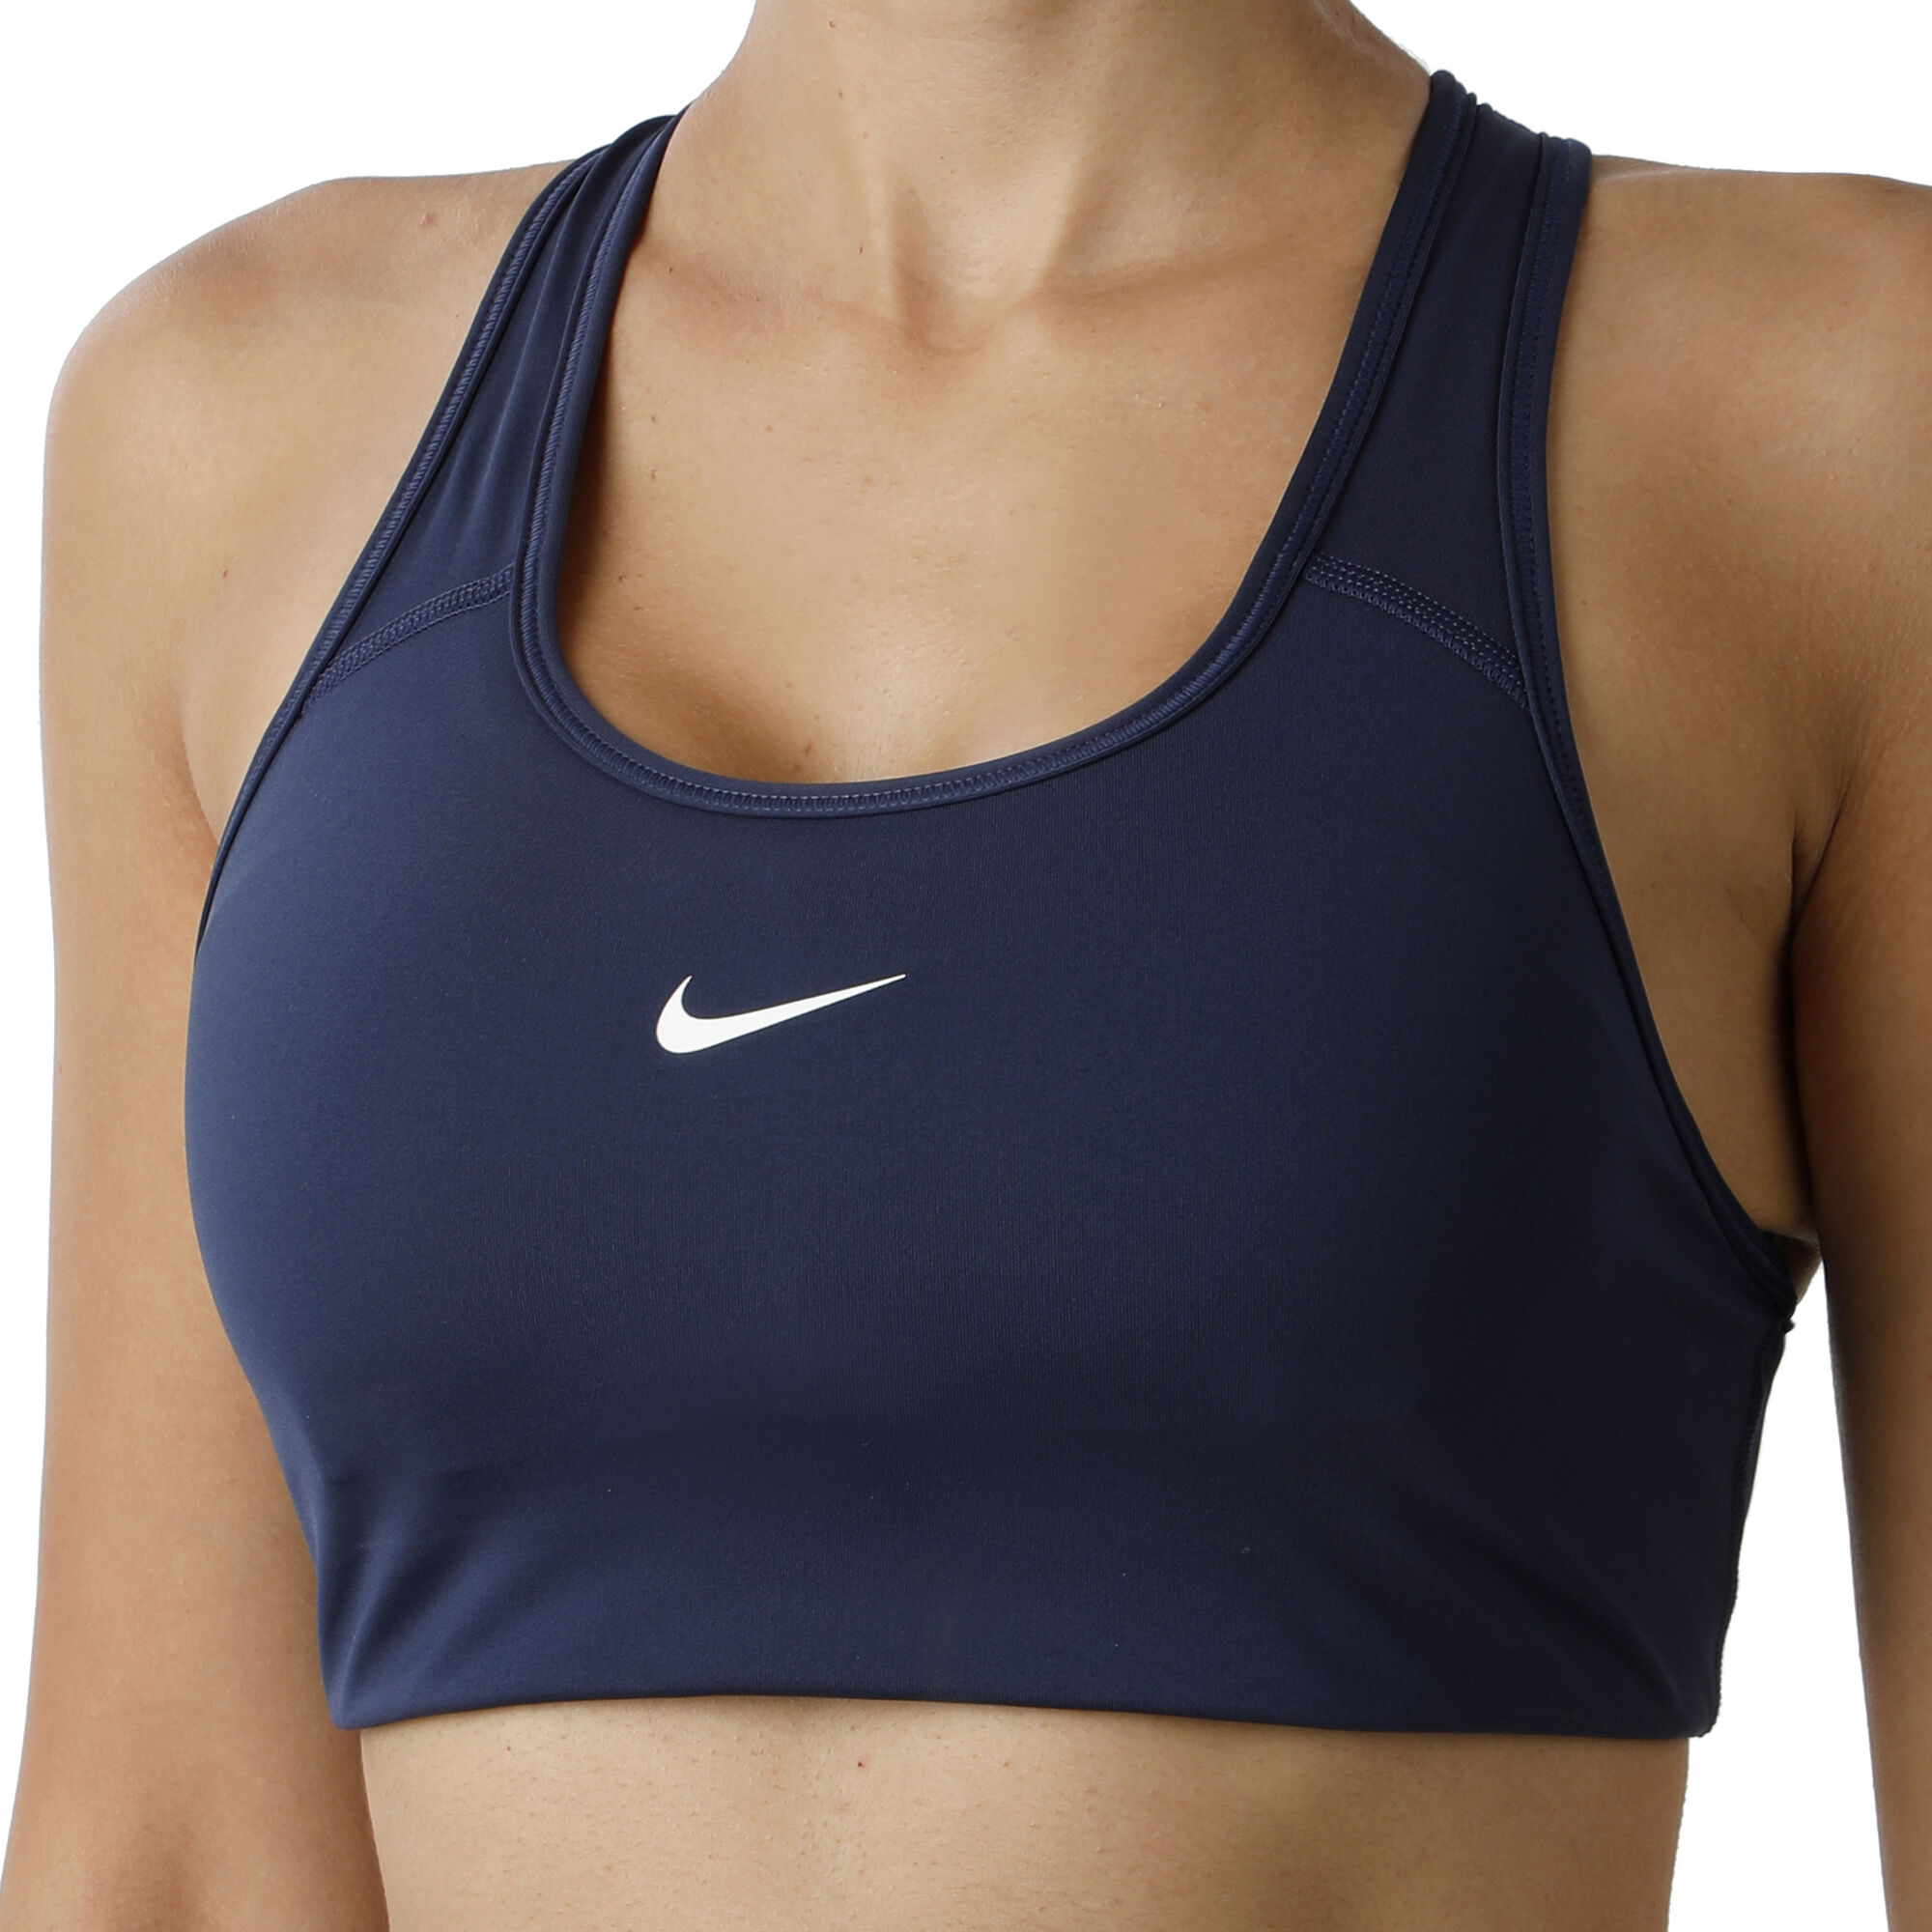 Buy Nike Sports Bras Women Dark Blue, White online